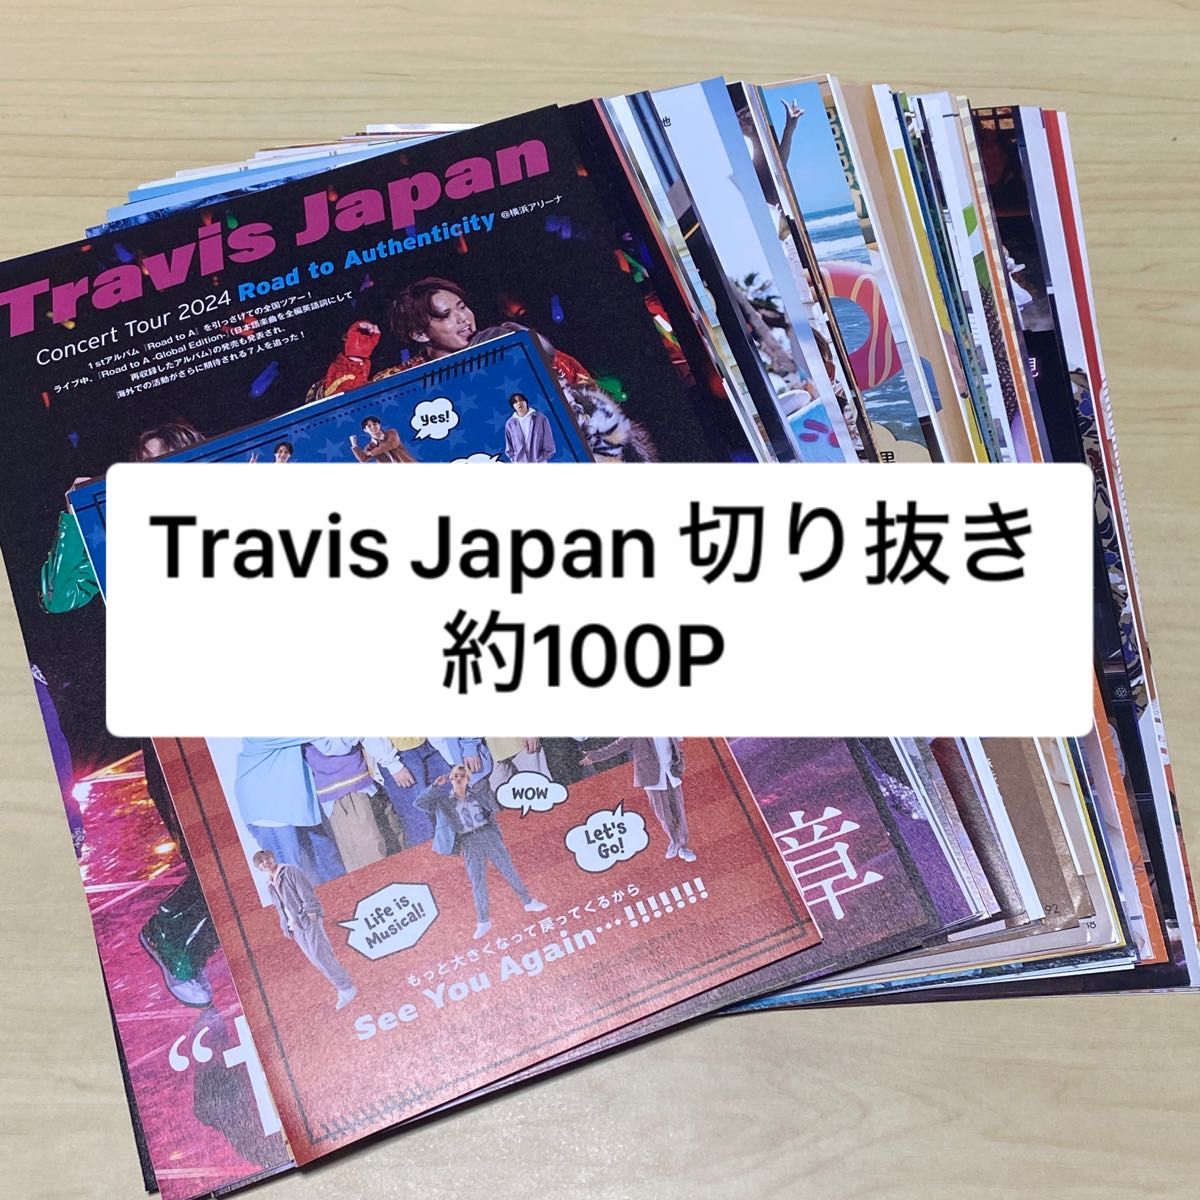 Travis Japan 雑誌切り抜き 約100枚